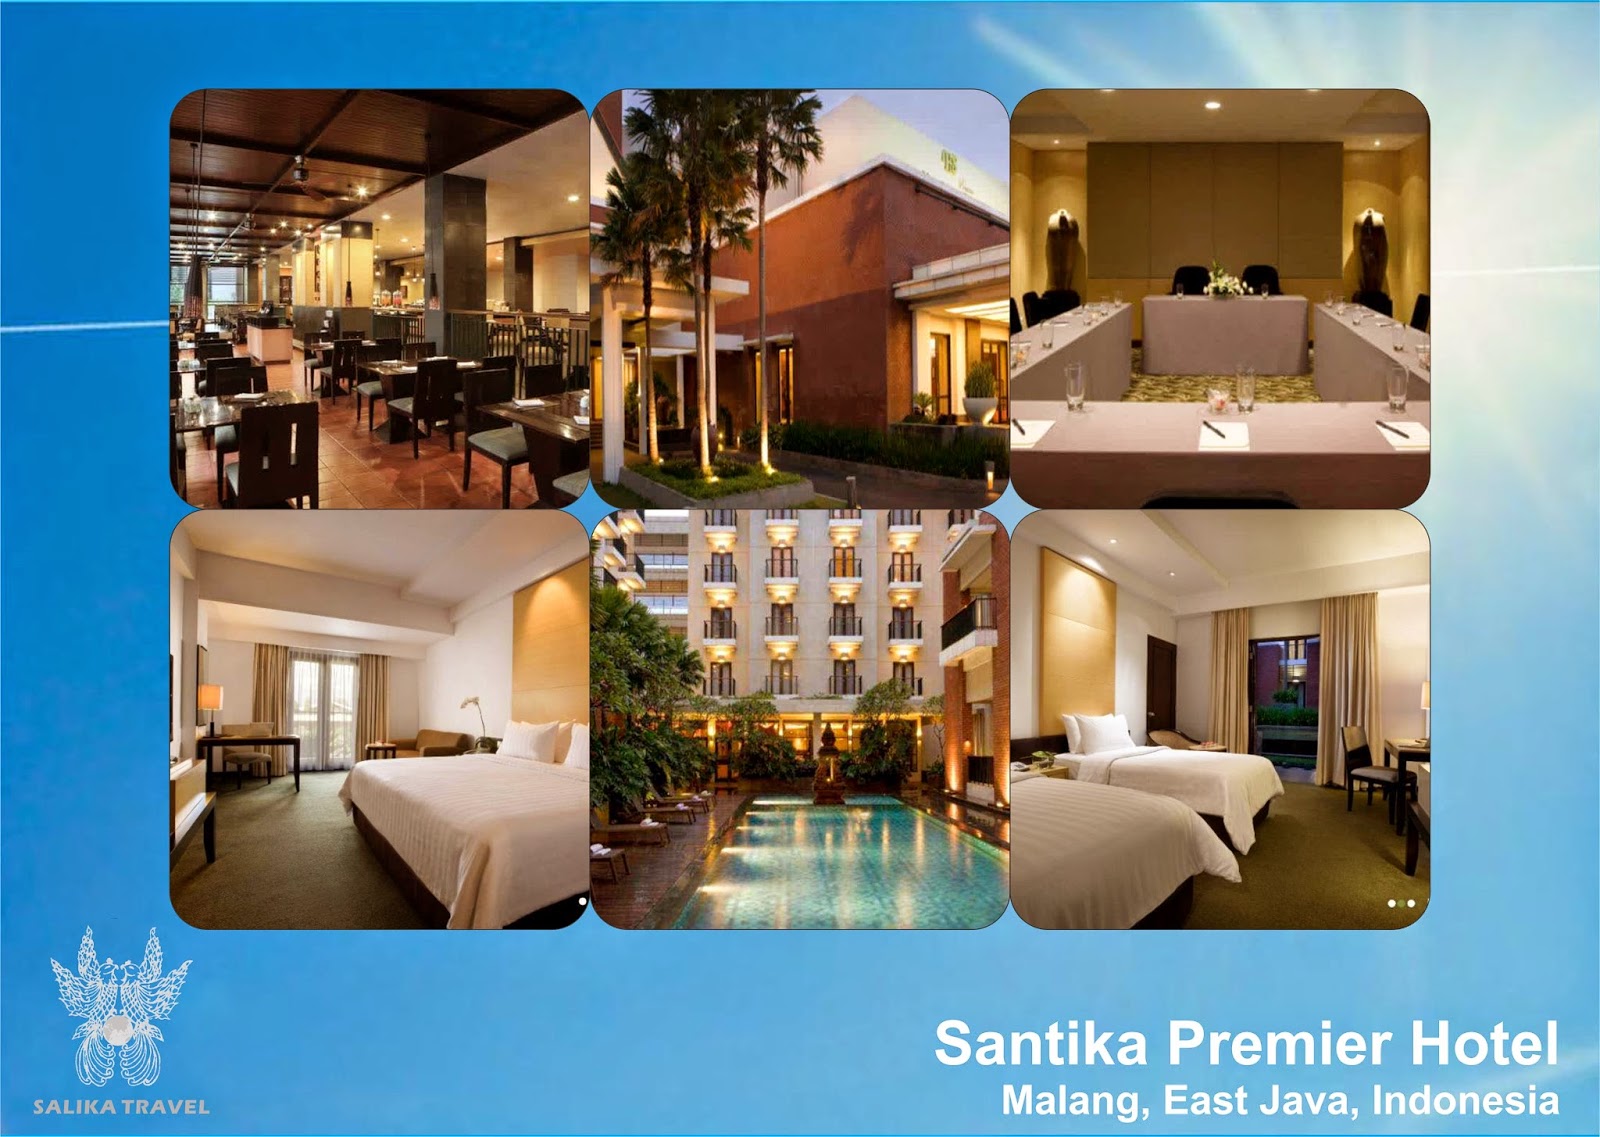 Santika Premier Hotel Malang - Salika Travel